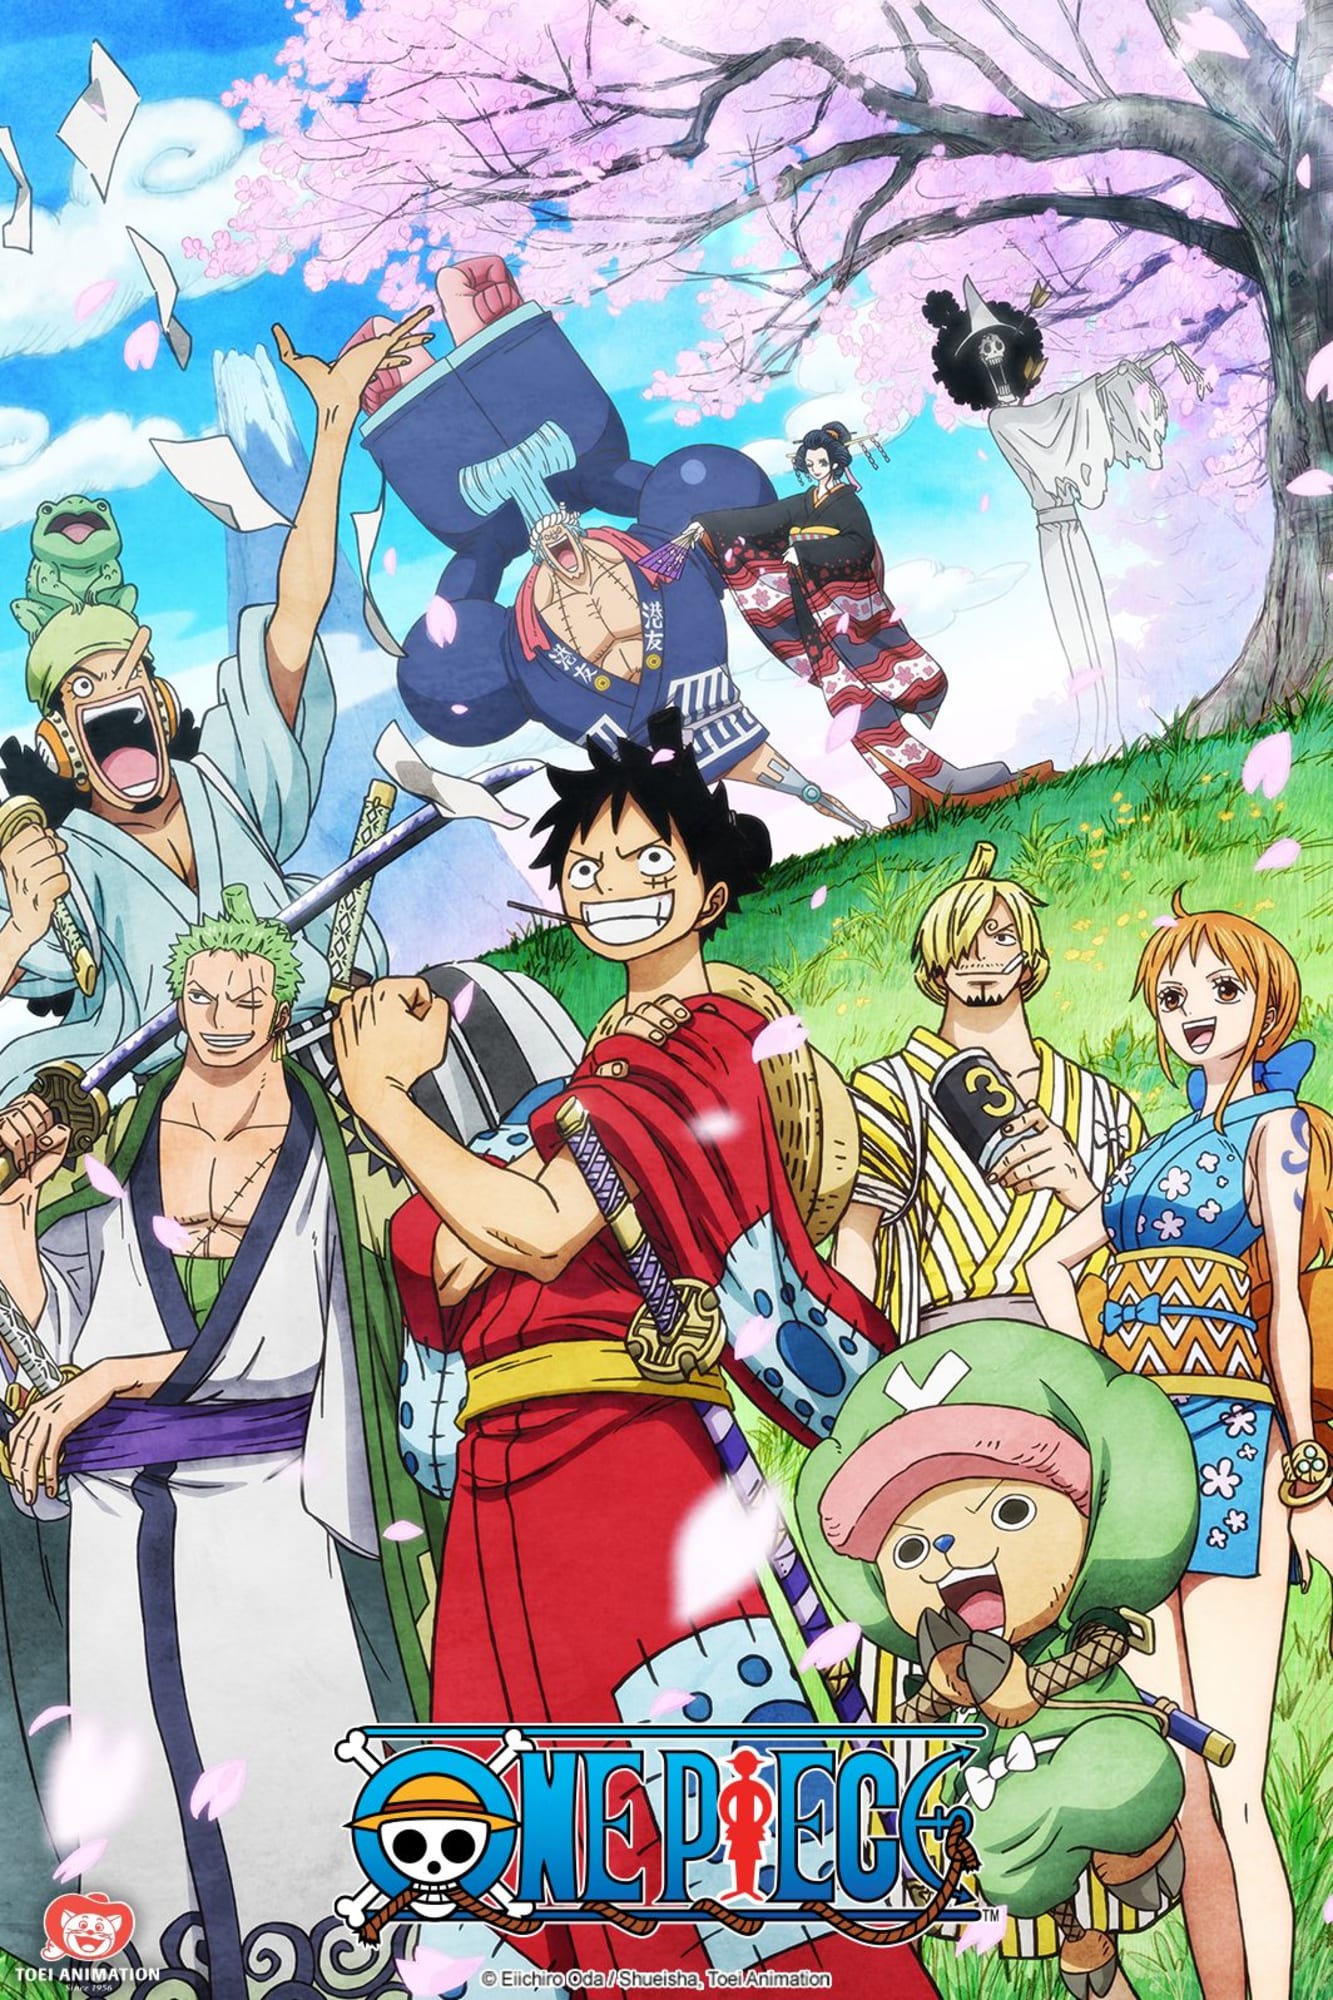  Filme One Piece Z estreia na Netflix